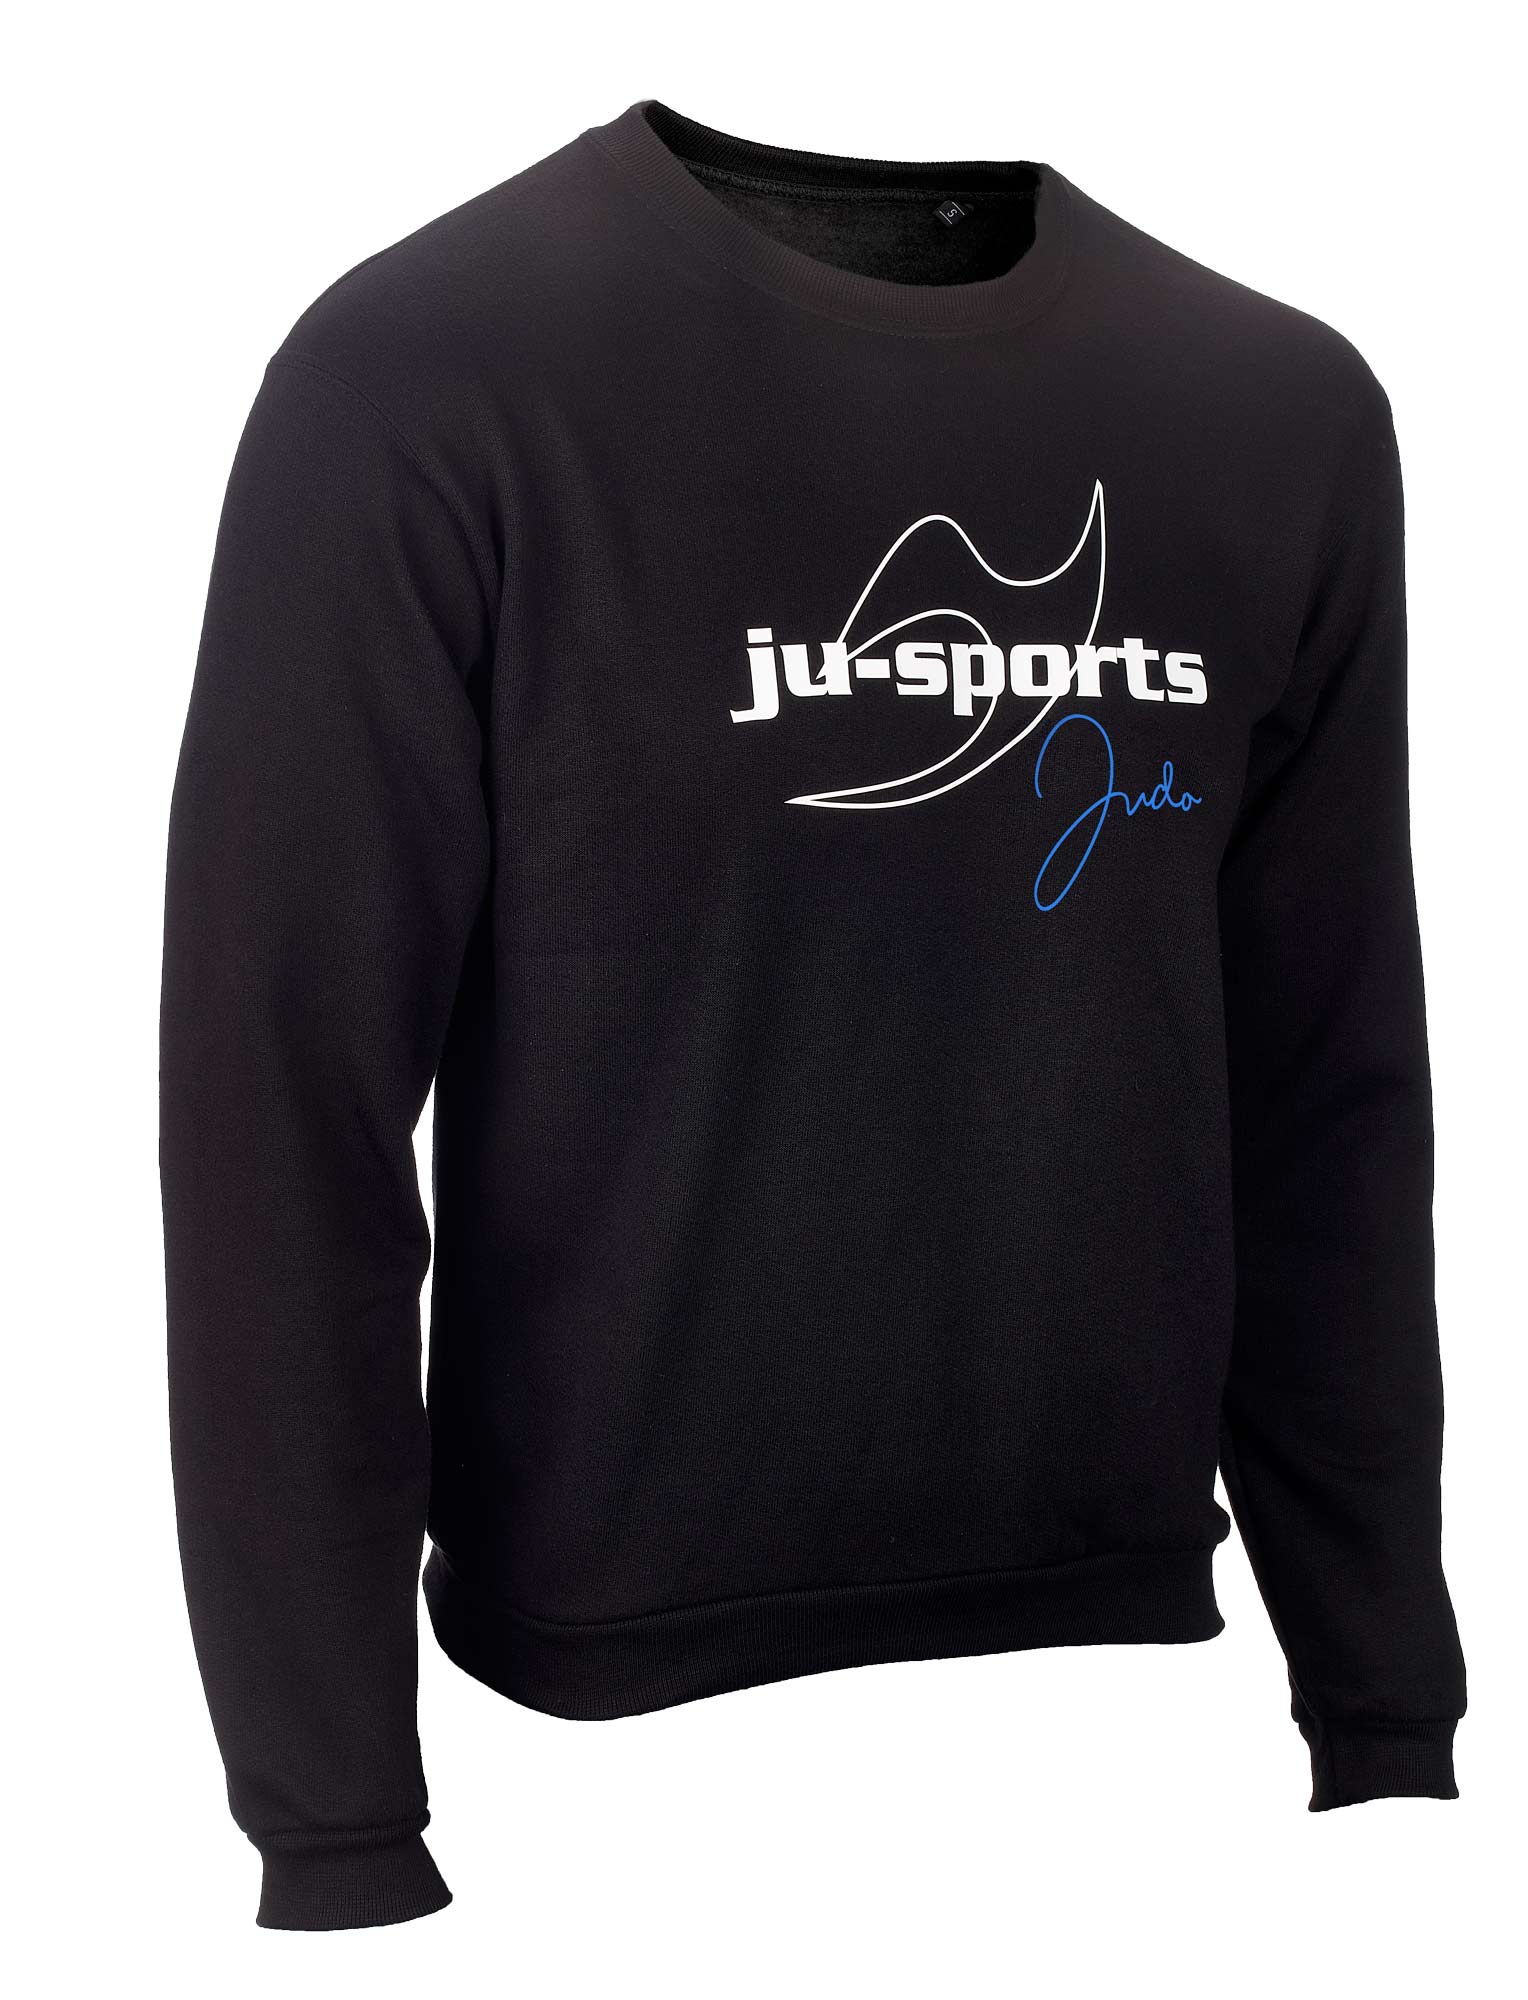 Ju-Sports Signature Line "Judo" Sweater